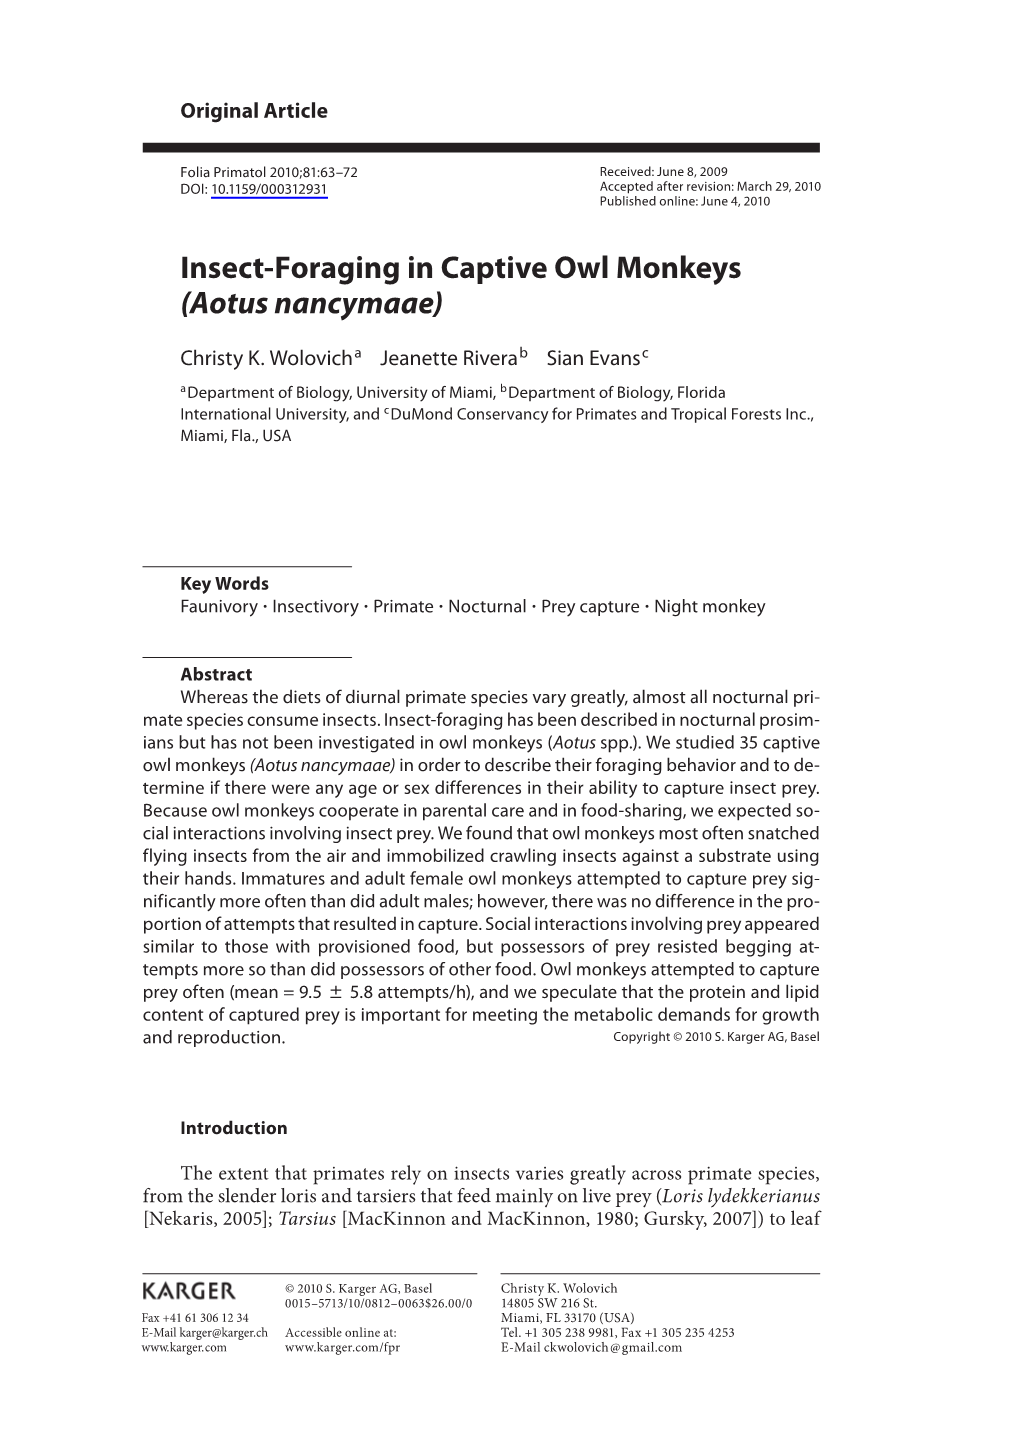 Insect-Foraging in Captive Owl Monkeys (Aotus Nancymaae)